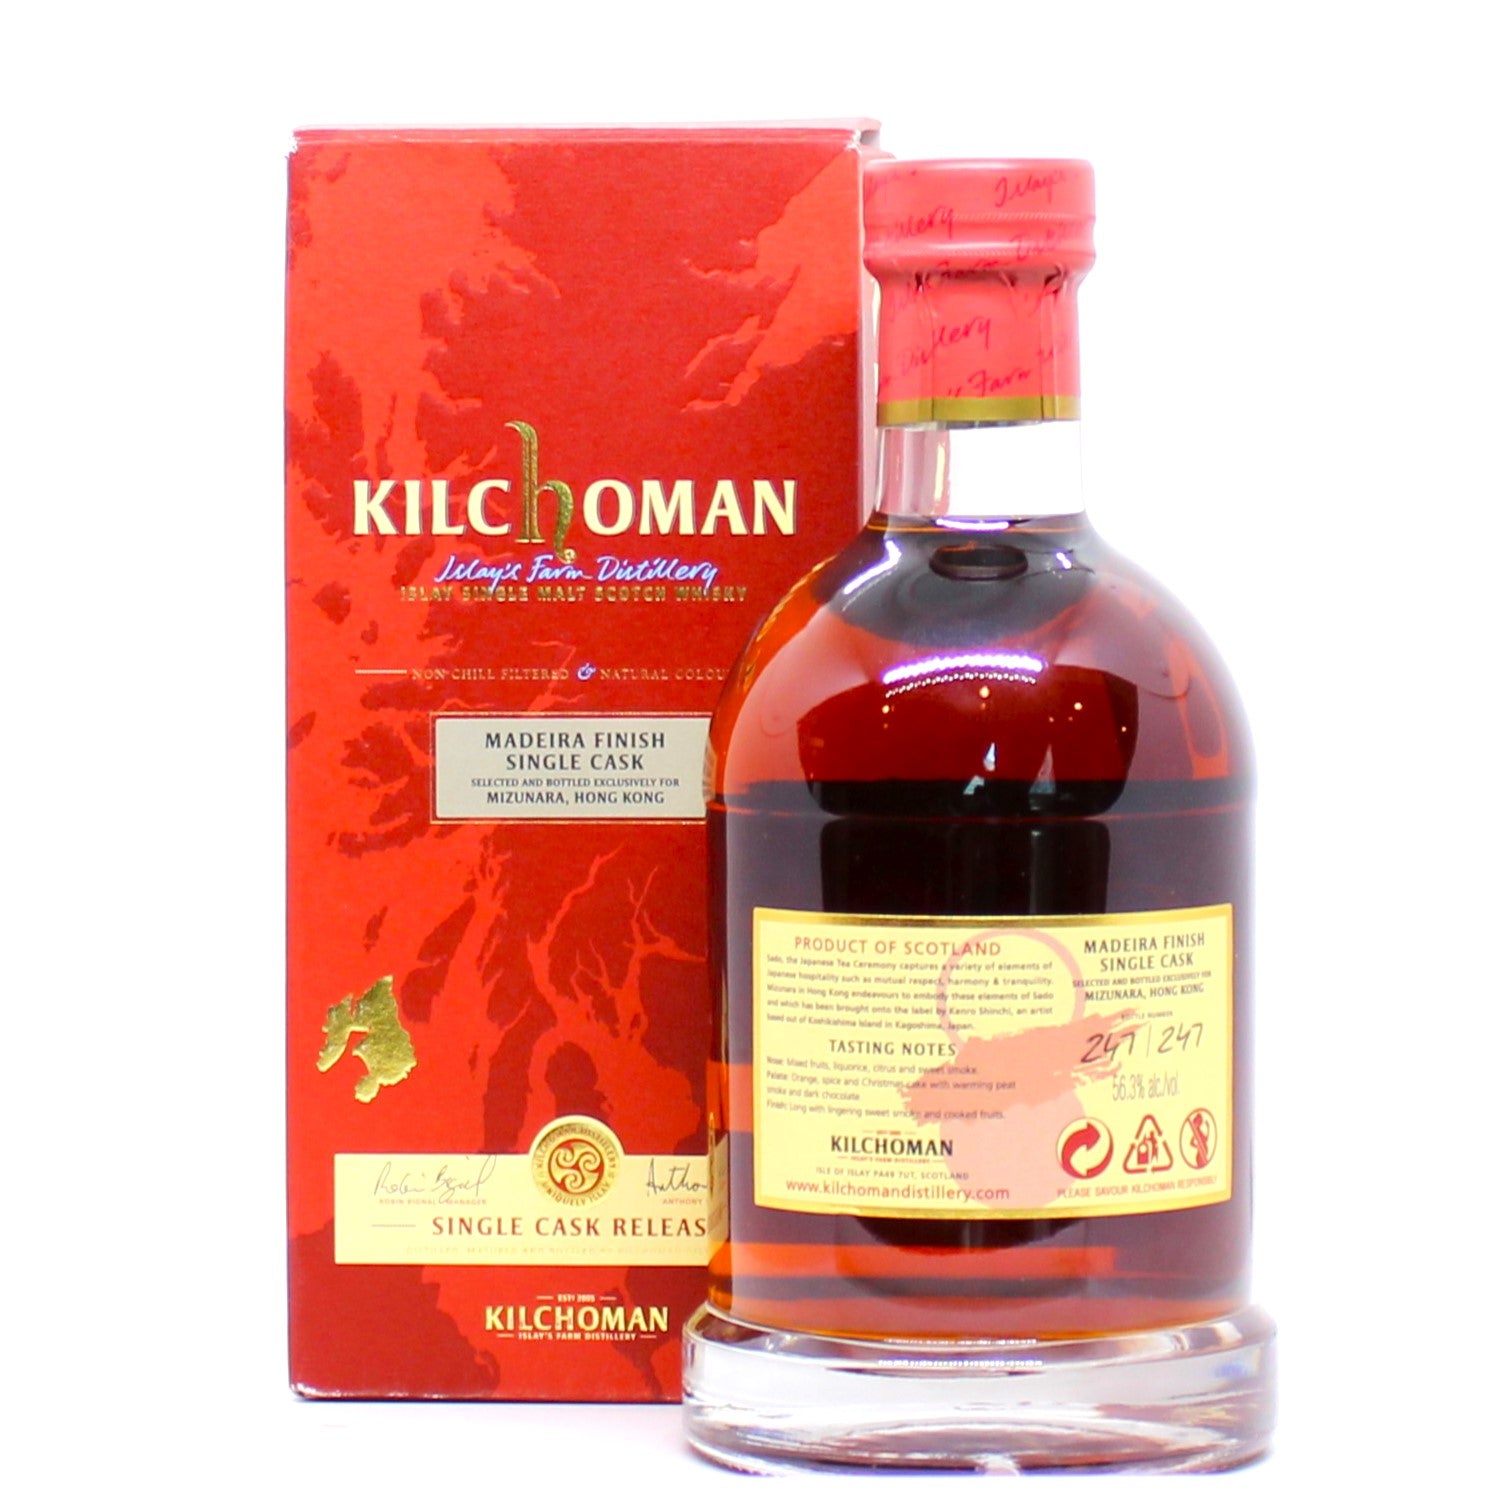 Kilchoman Single Cask "Sado - The Host" Madeira Finish Single Malt Whisky